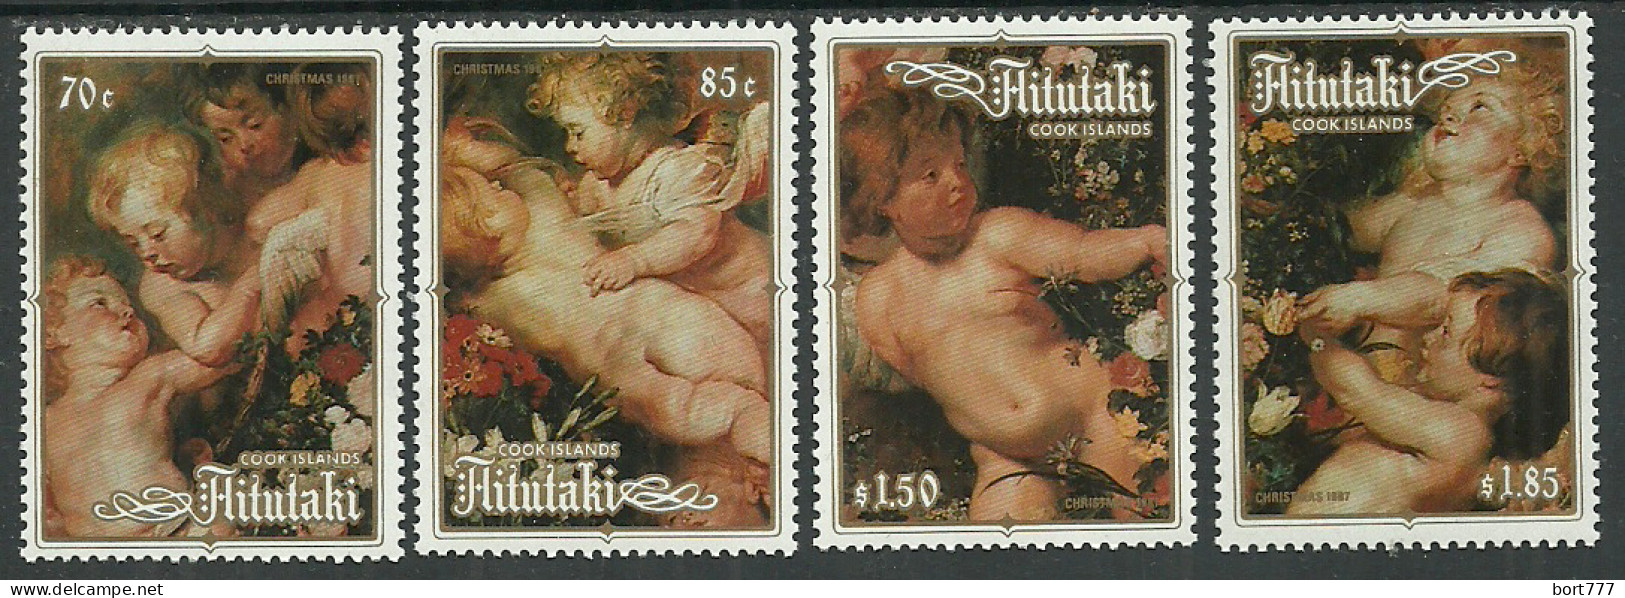 Aitutaki 1987 Mint Stamps MNH (**) Set Painting - Aitutaki